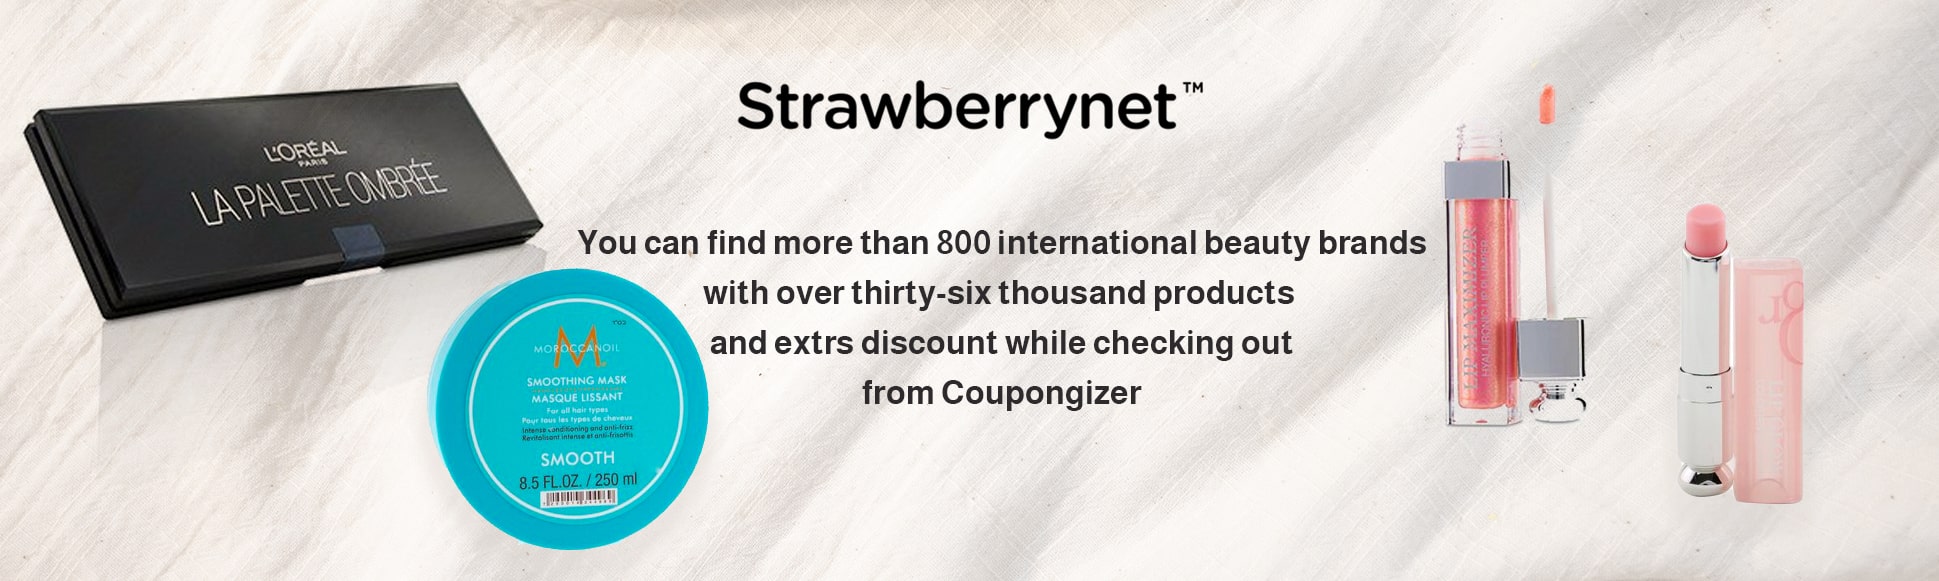 Strawberrynet Discount Code UAE